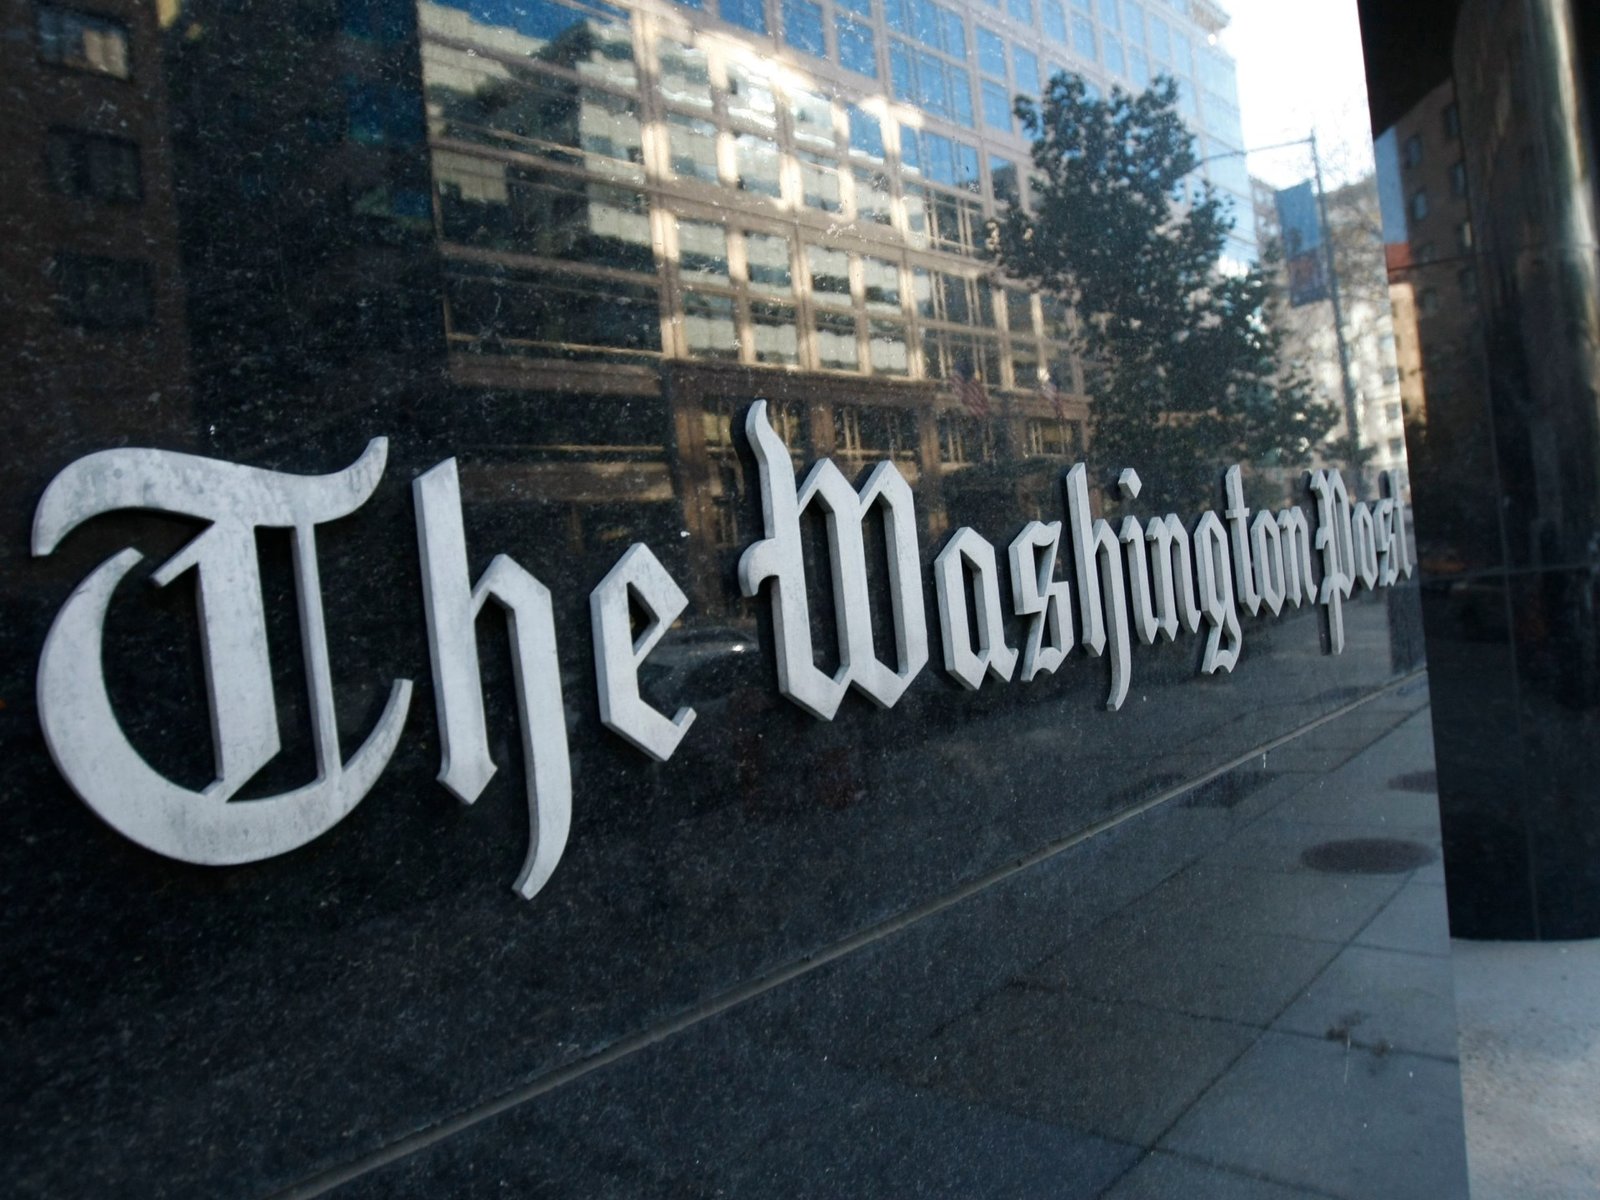 Newly named Washington Post editor bows out after backlash | Media News